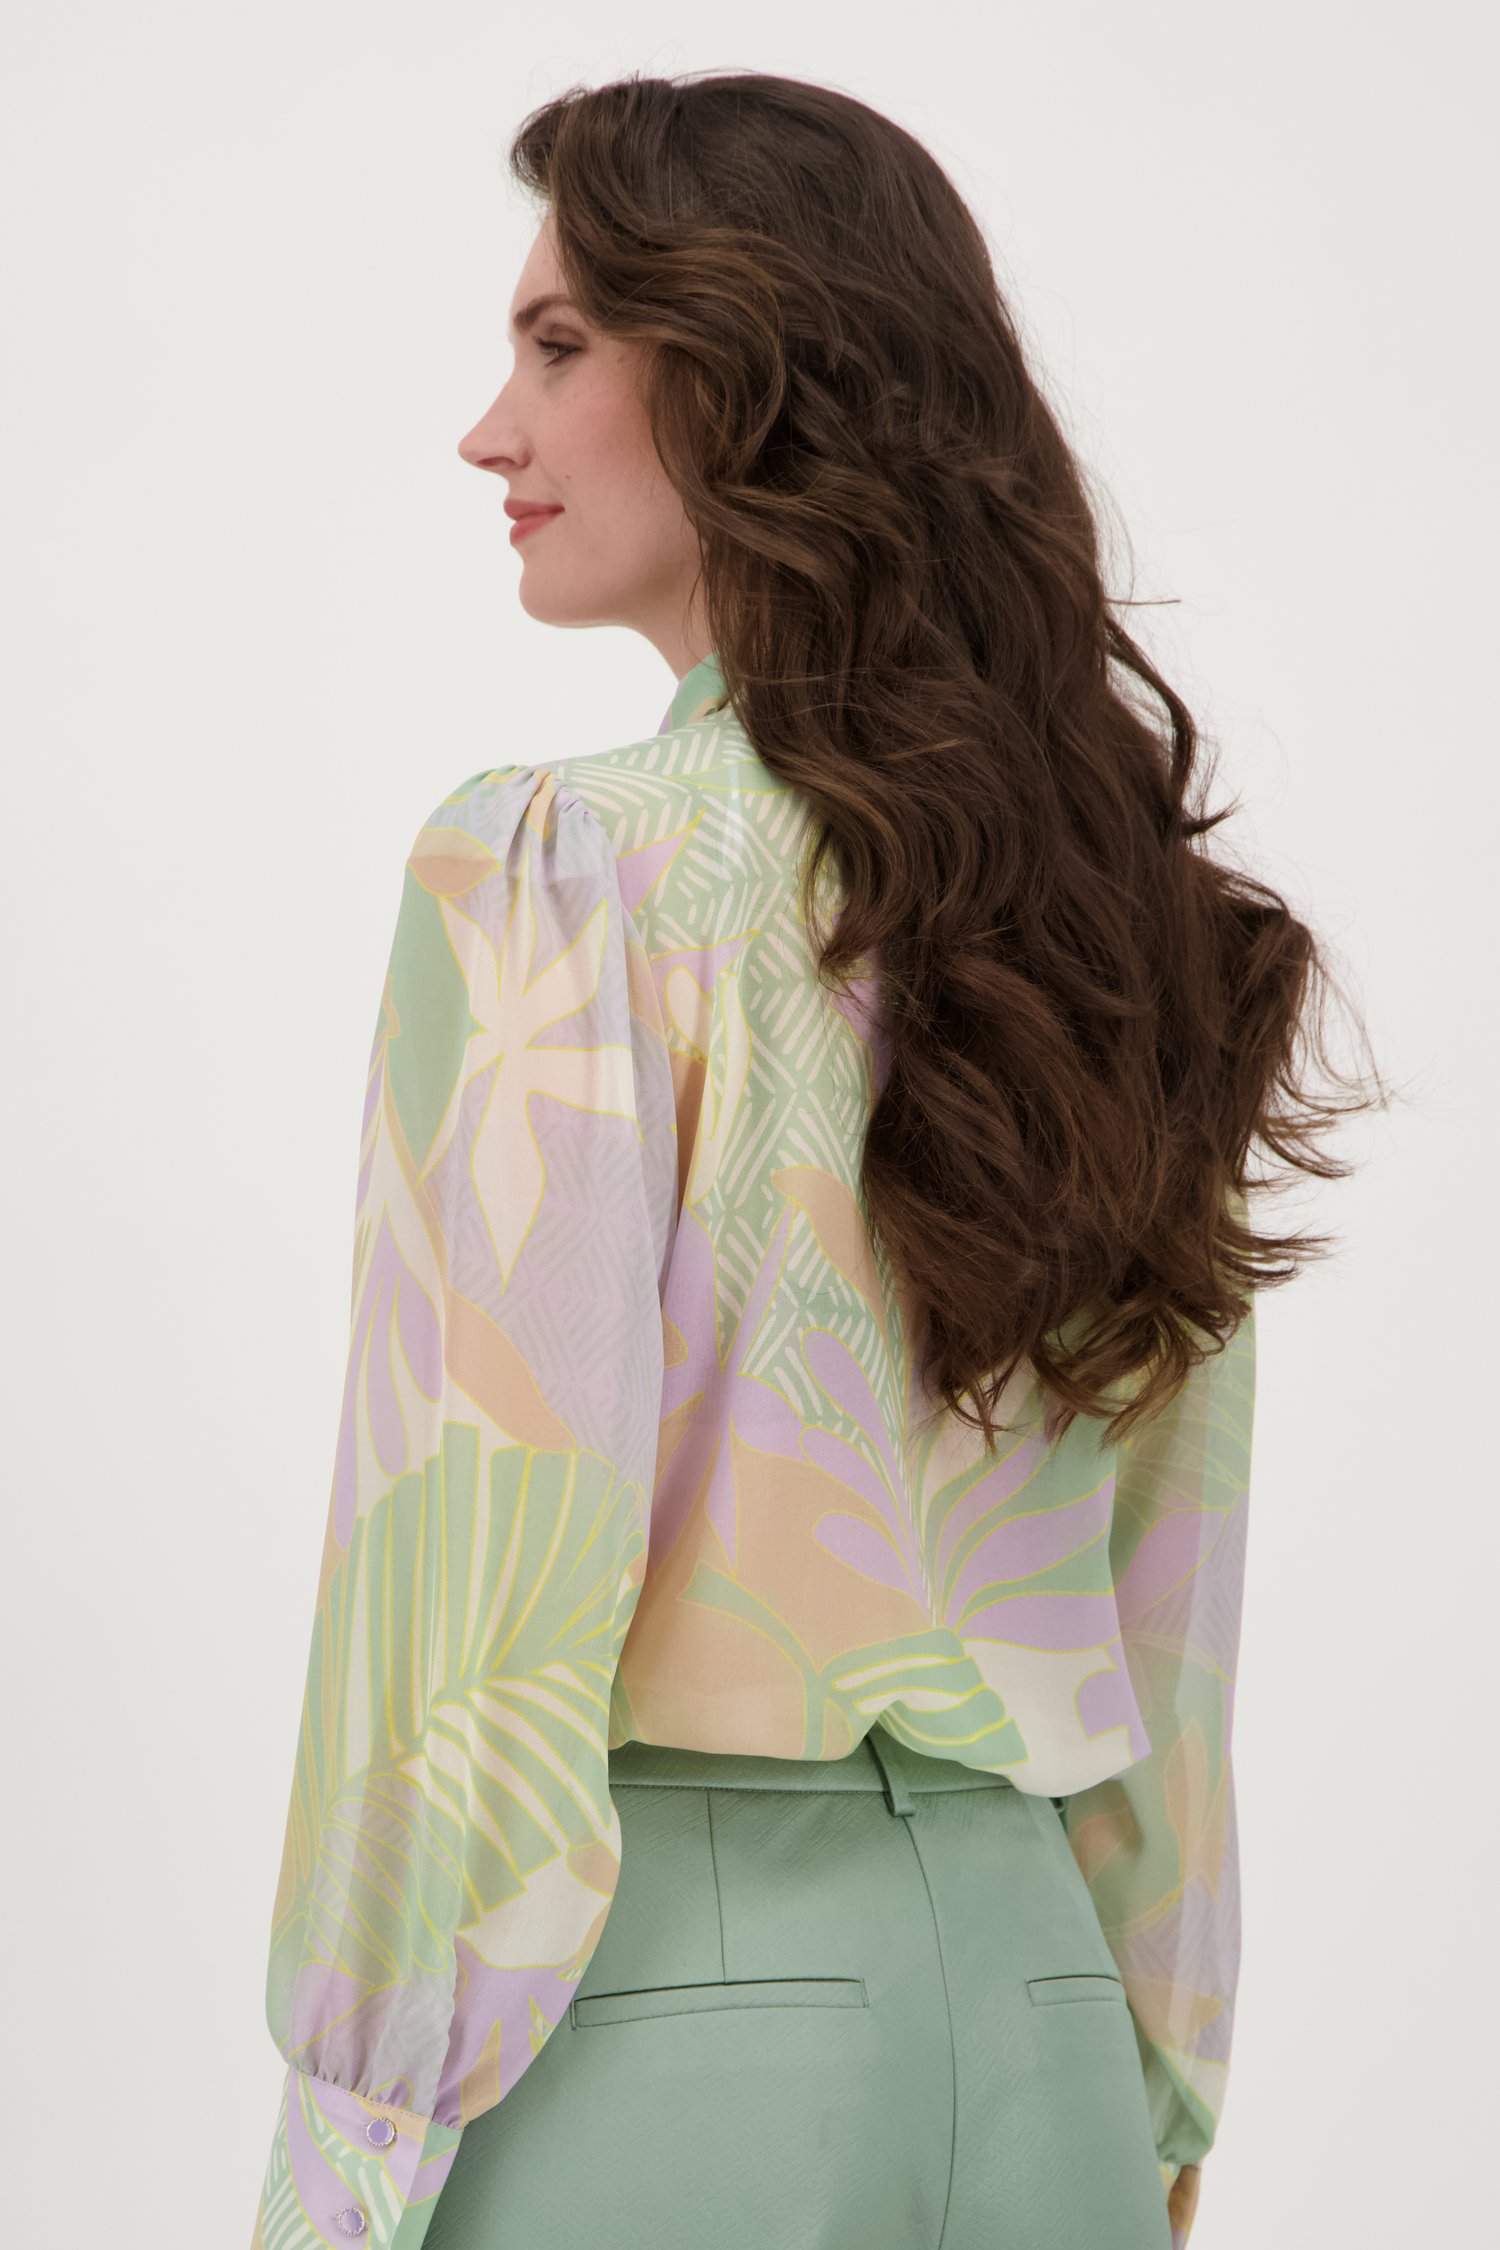 Fijne blouse met pastel bladerprint van D'Auvry voor Dames